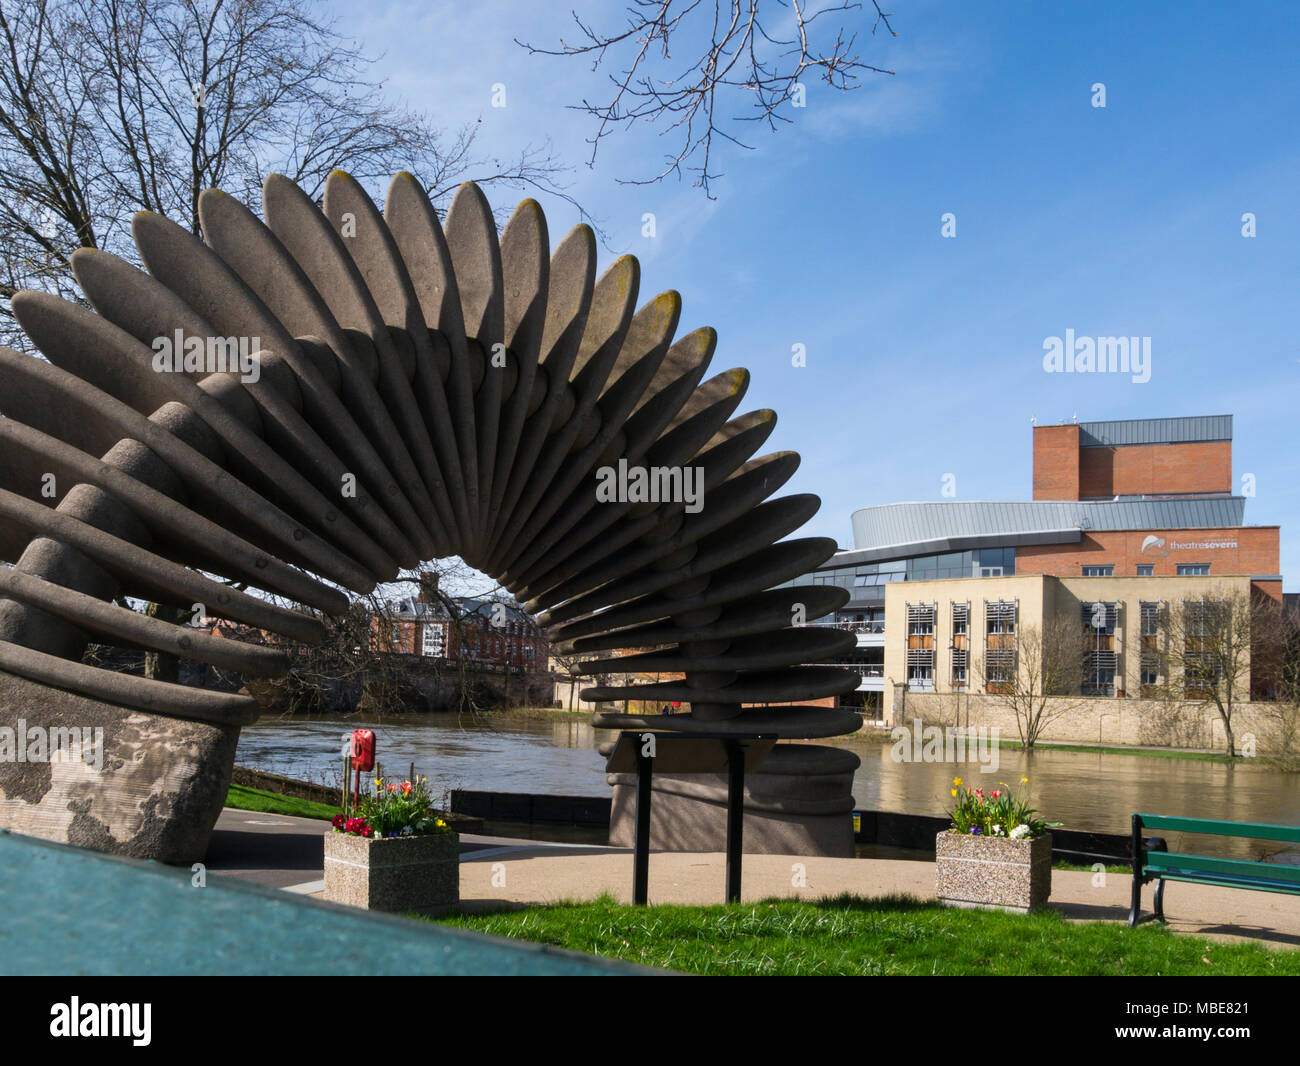 The Quantum Leap Mardol Quay sculpture next to  River Severn in Shrewsbury Shropshire England UK created to celebrate bicentenary Charles Darwin born  Stock Photo